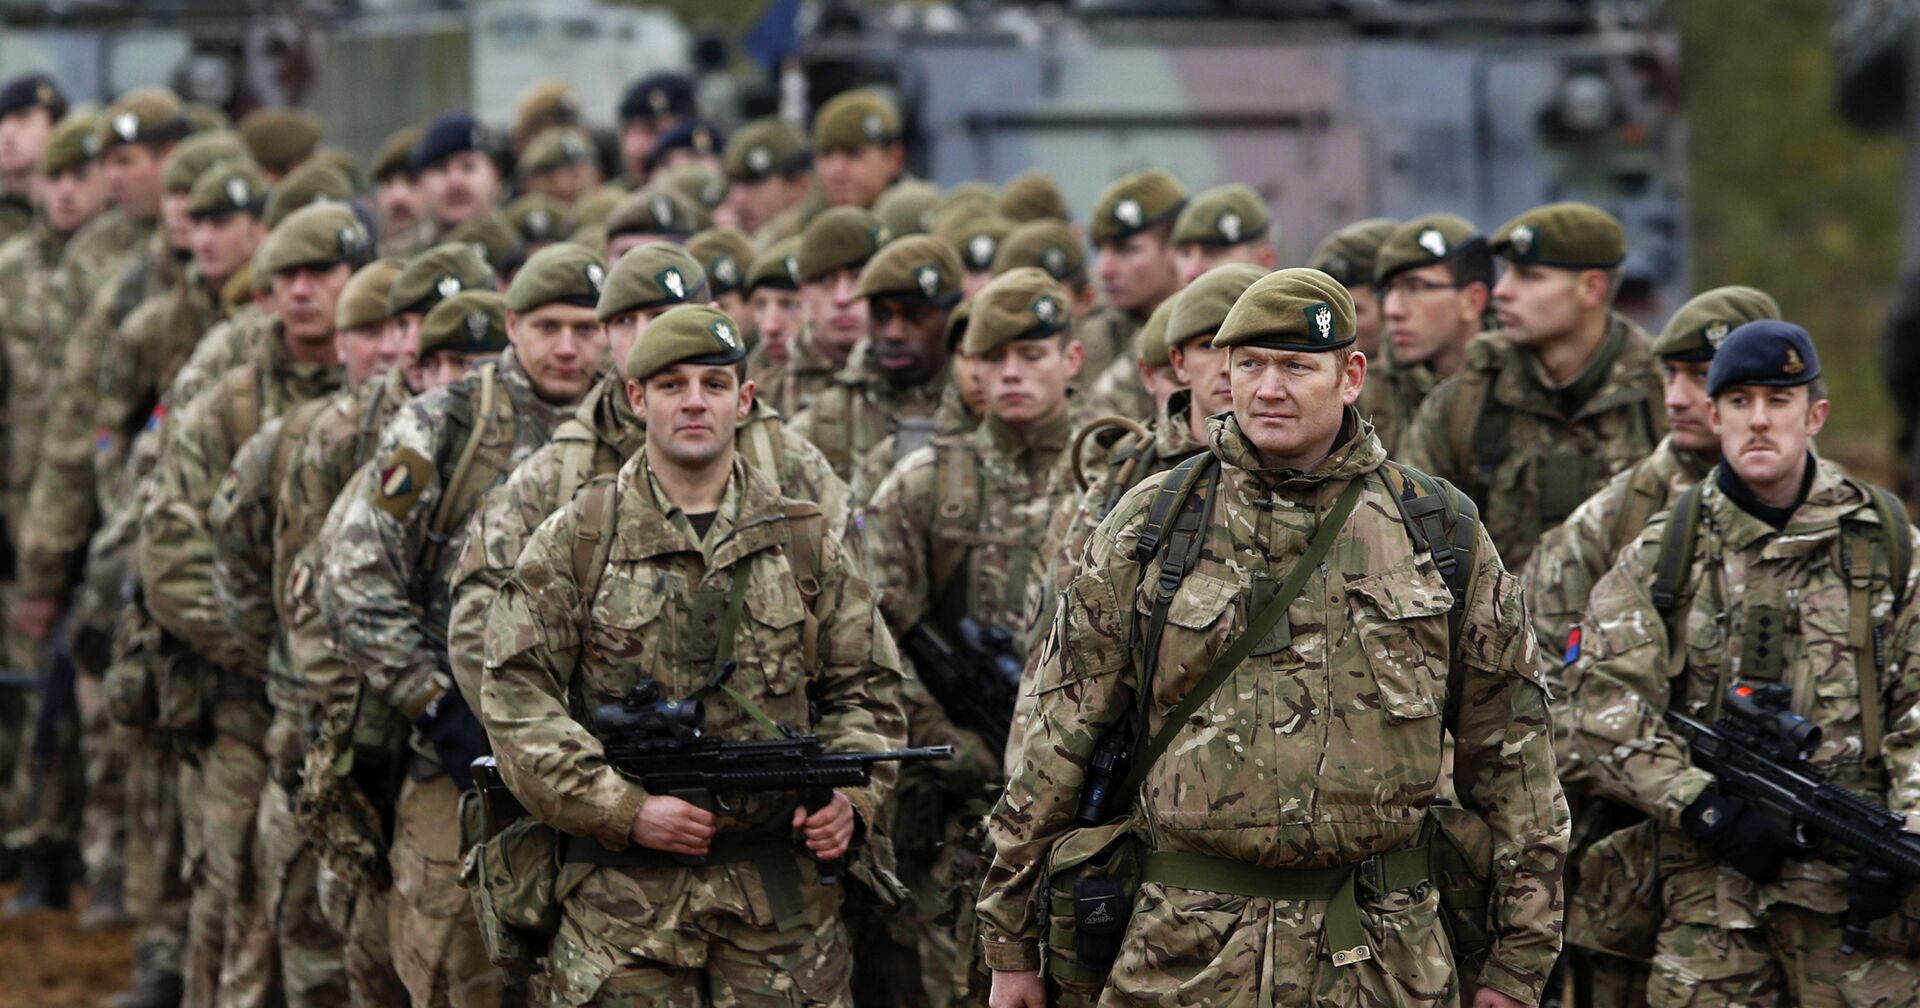 Британские солдаты на учениях НАТО Iron Sword 2014 в Литве - ИноСМИ, 1920, 15.11.2021